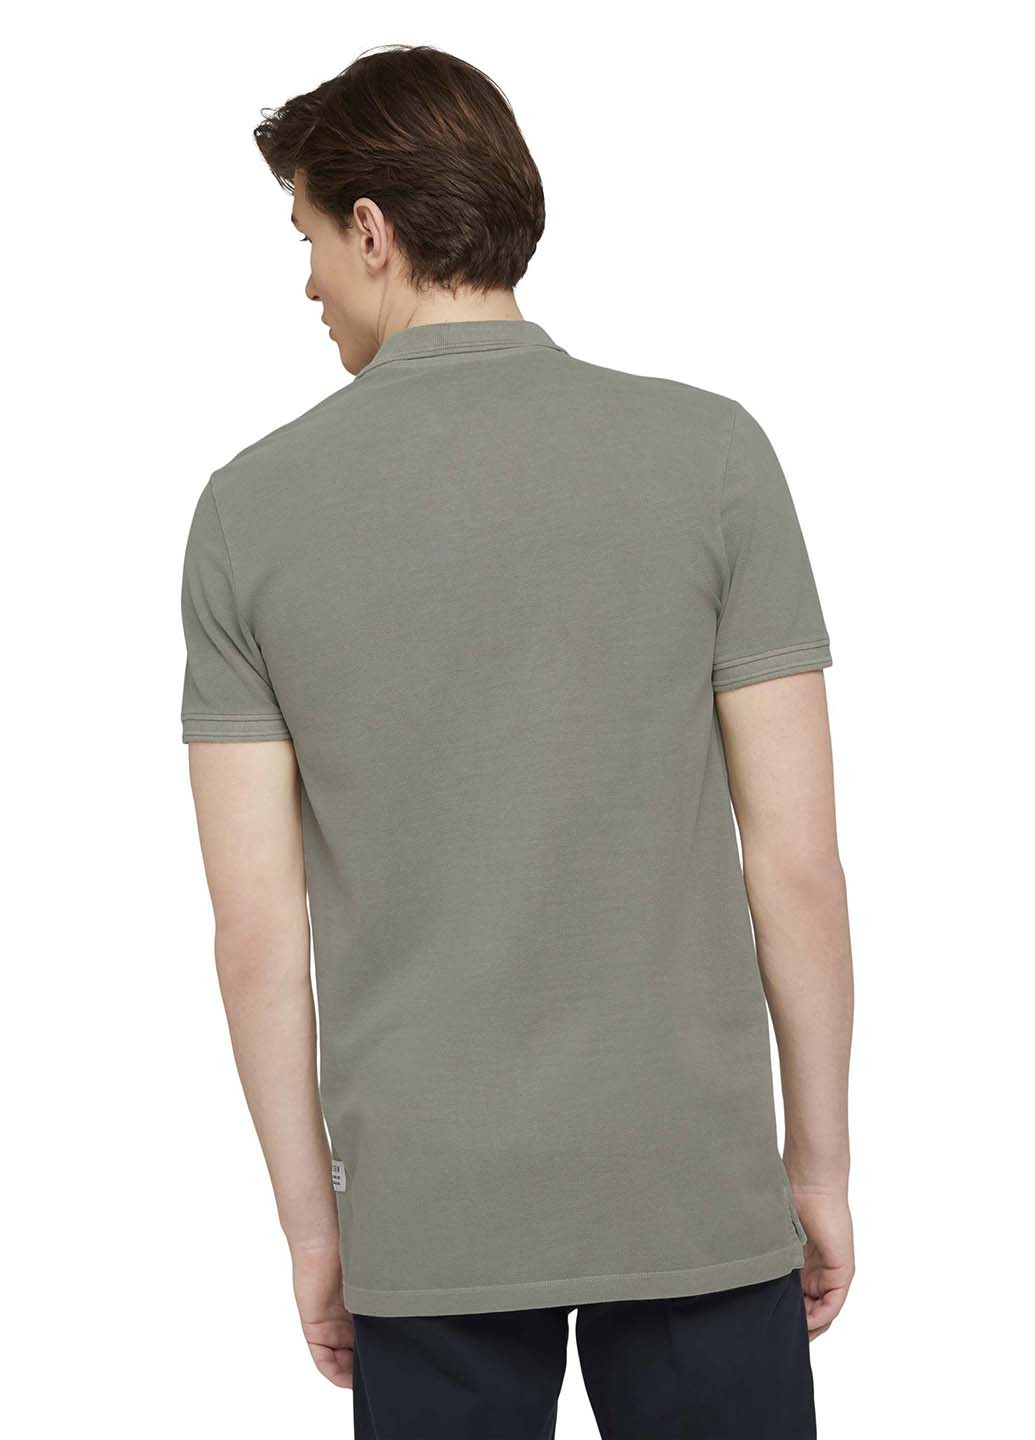 Оливковая (хаки) футболка-поло для мужчин Tom Tailor однотонная